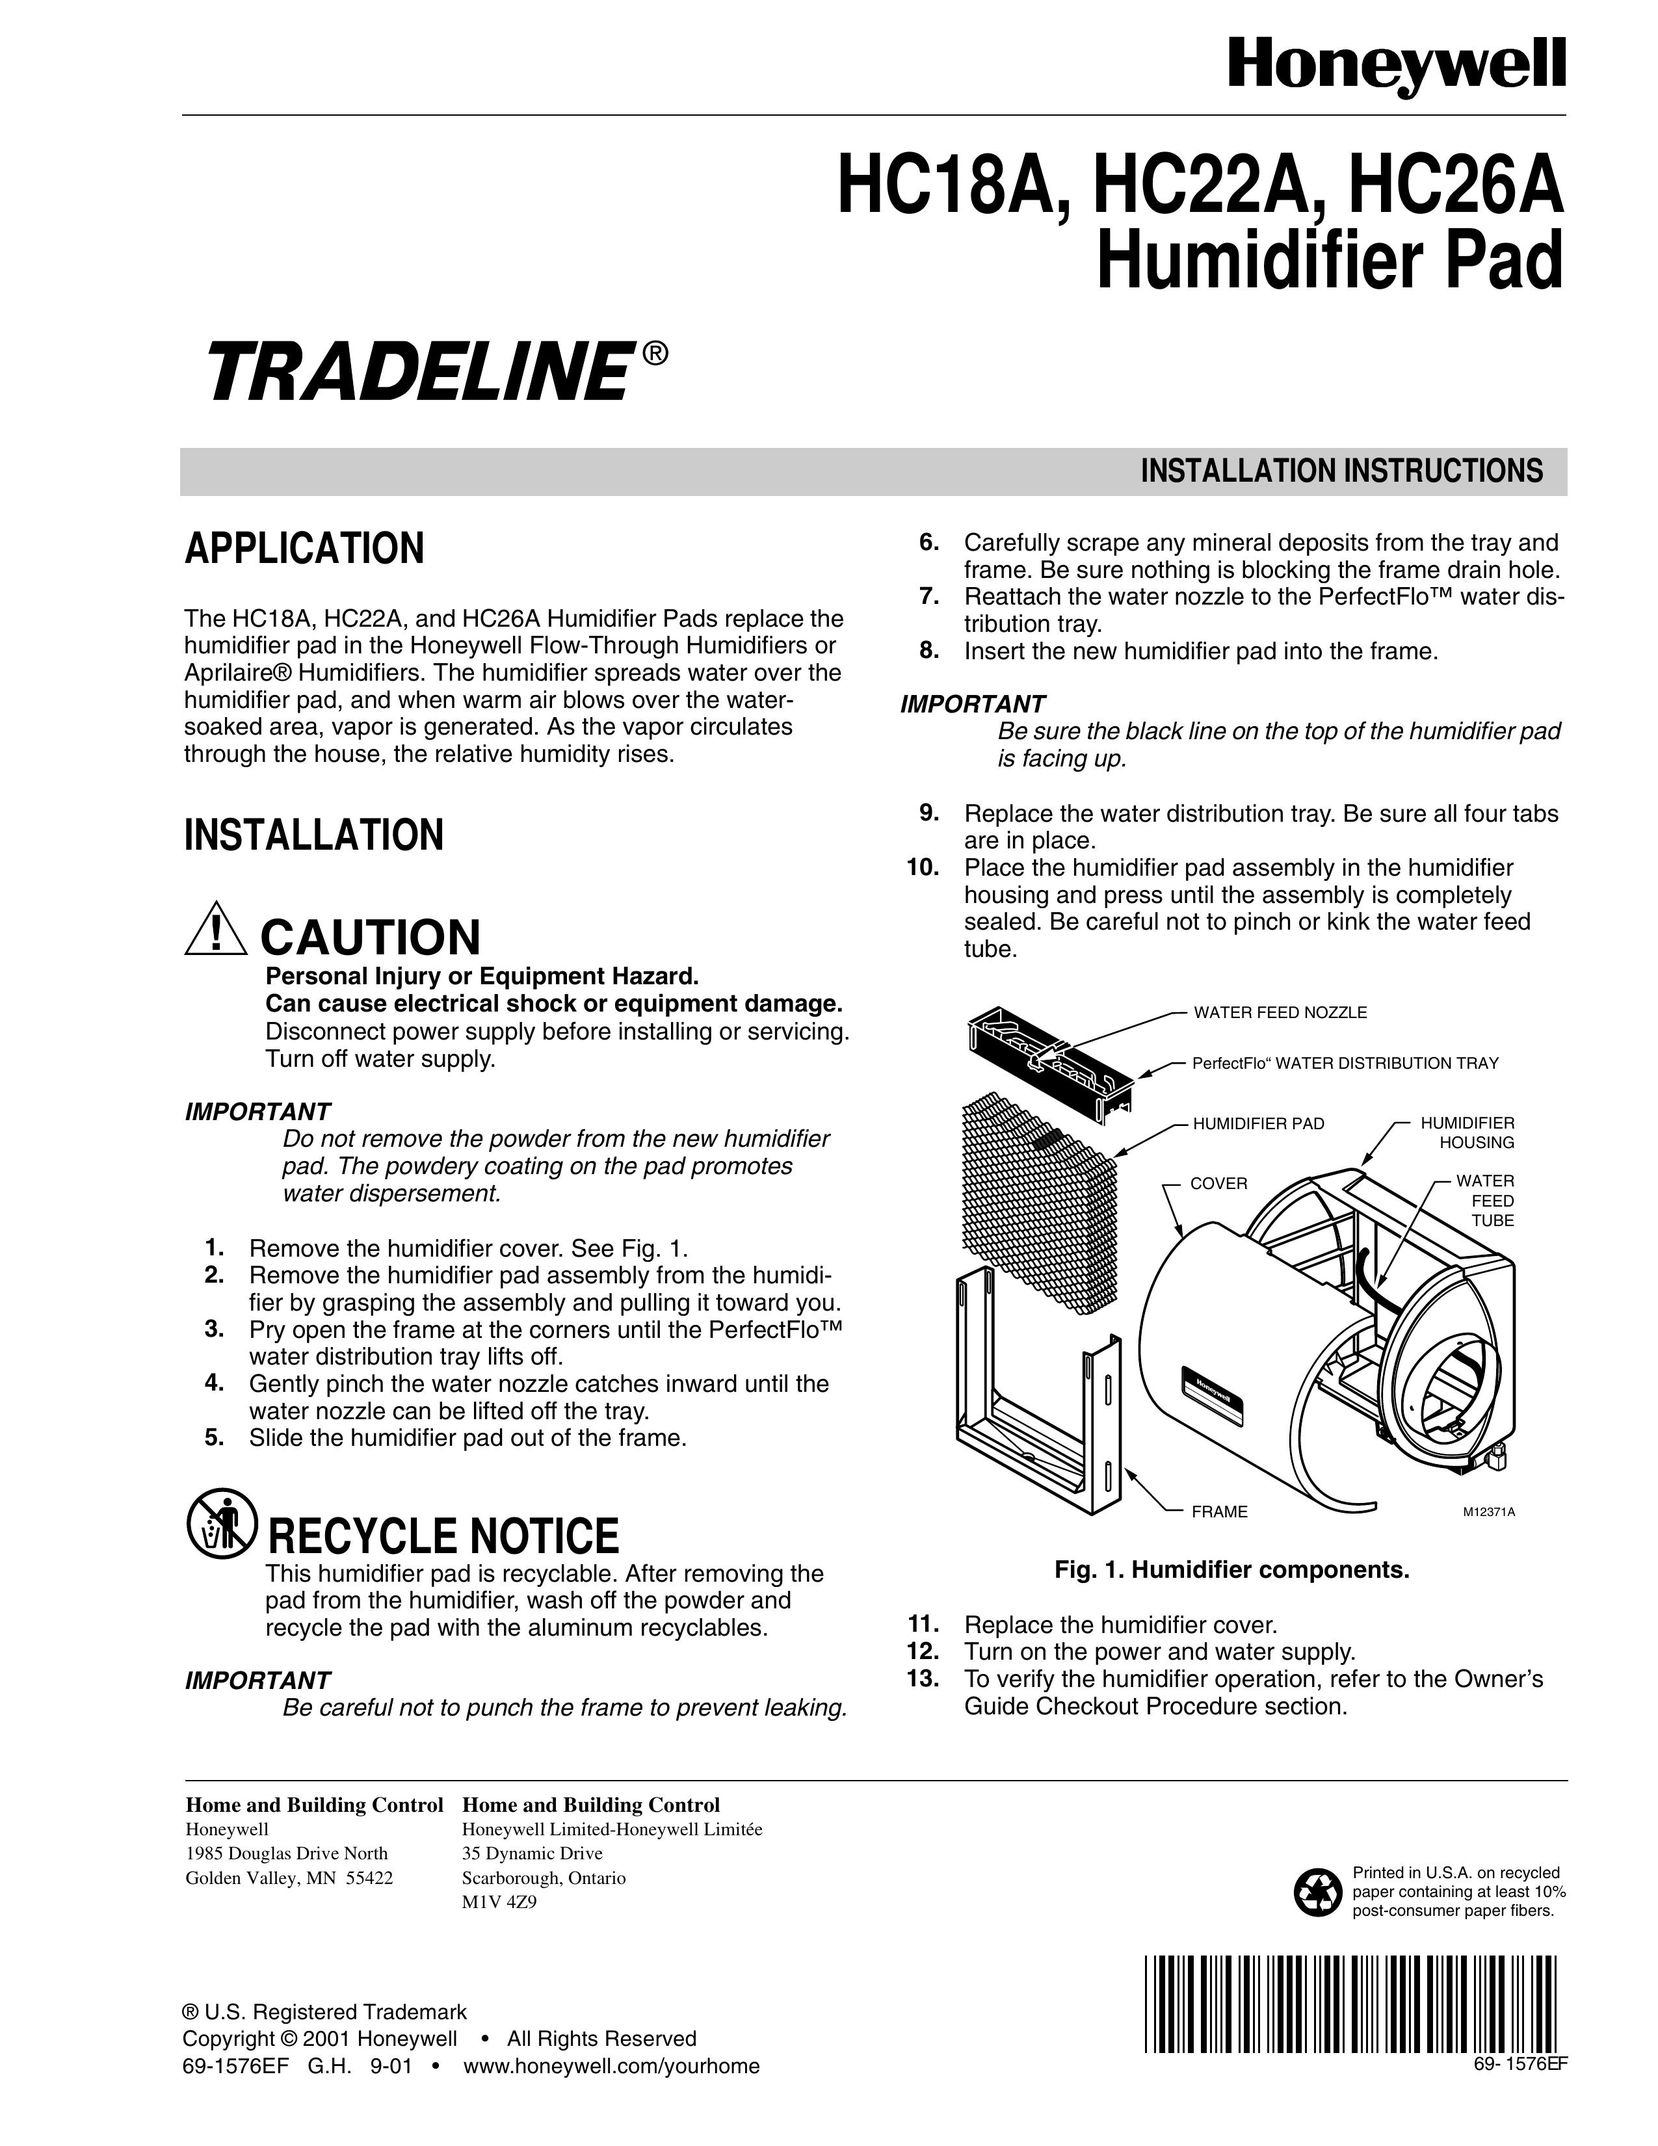 Honeywell HC22A Humidifier User Manual